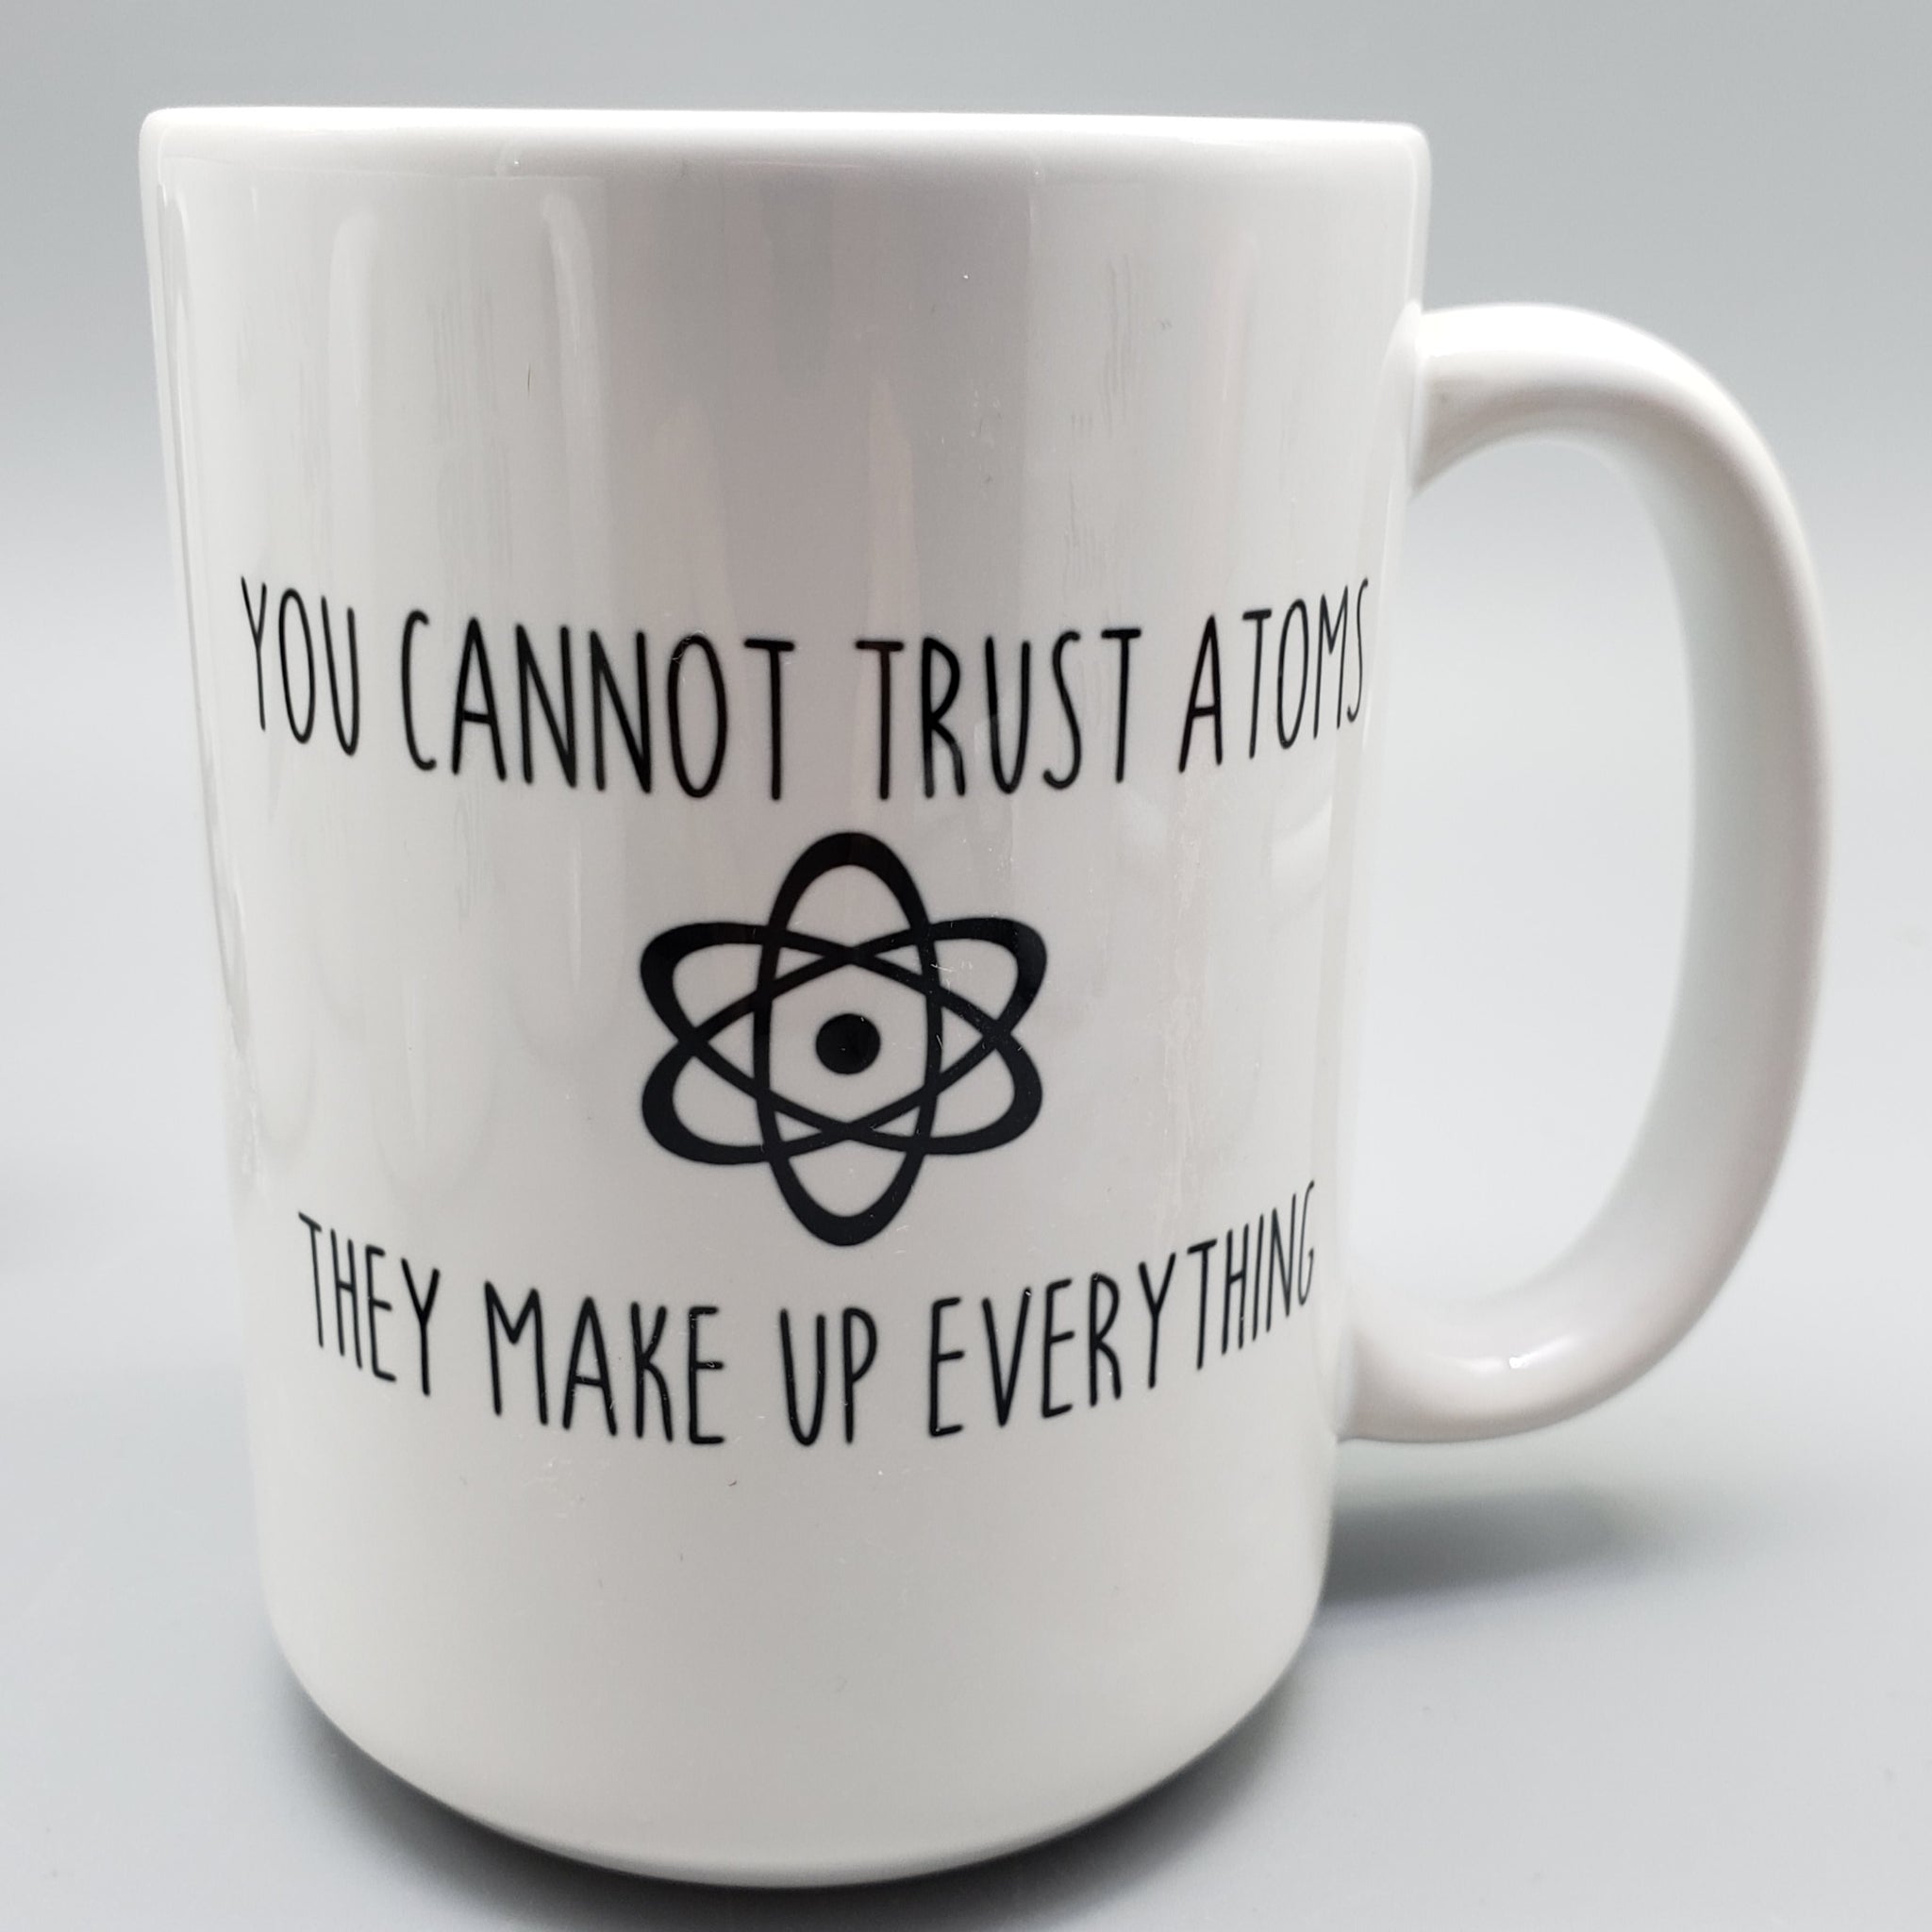 Cannot trust atoms